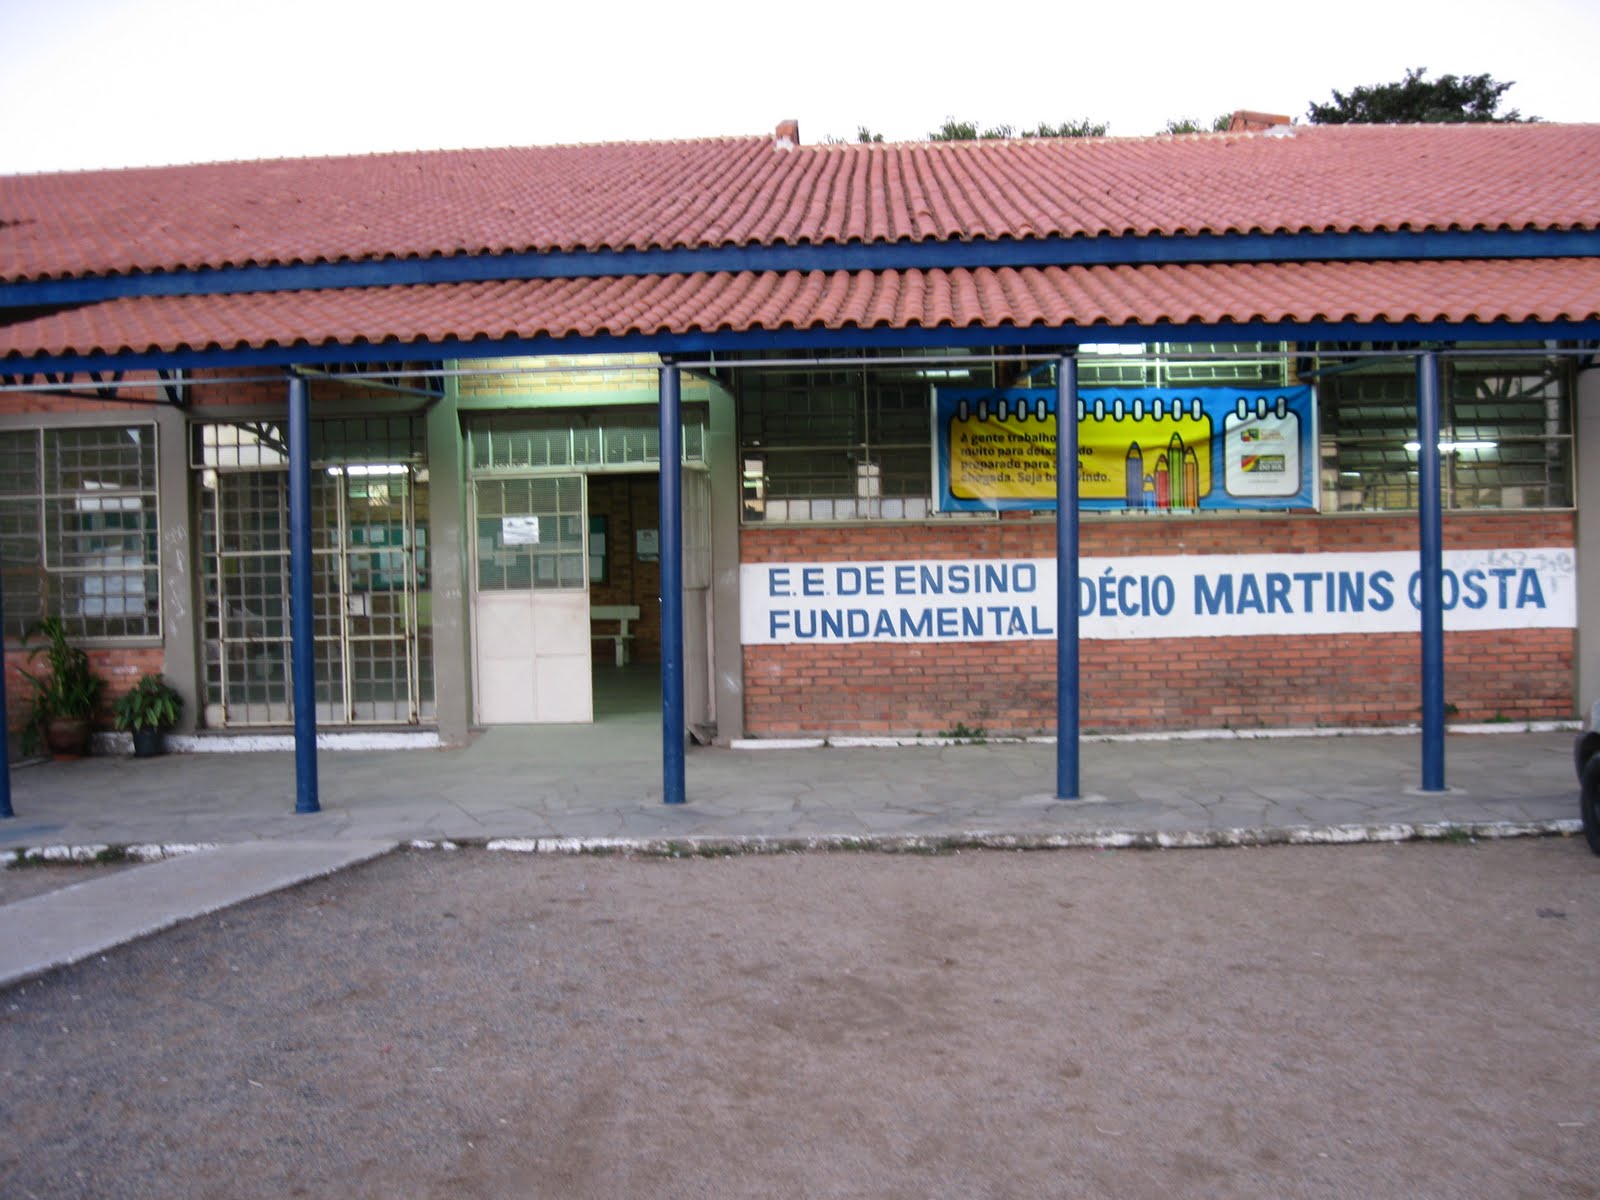 Escola Estadual de Ensino Fundamental Décio Martins Costa - POA/RS